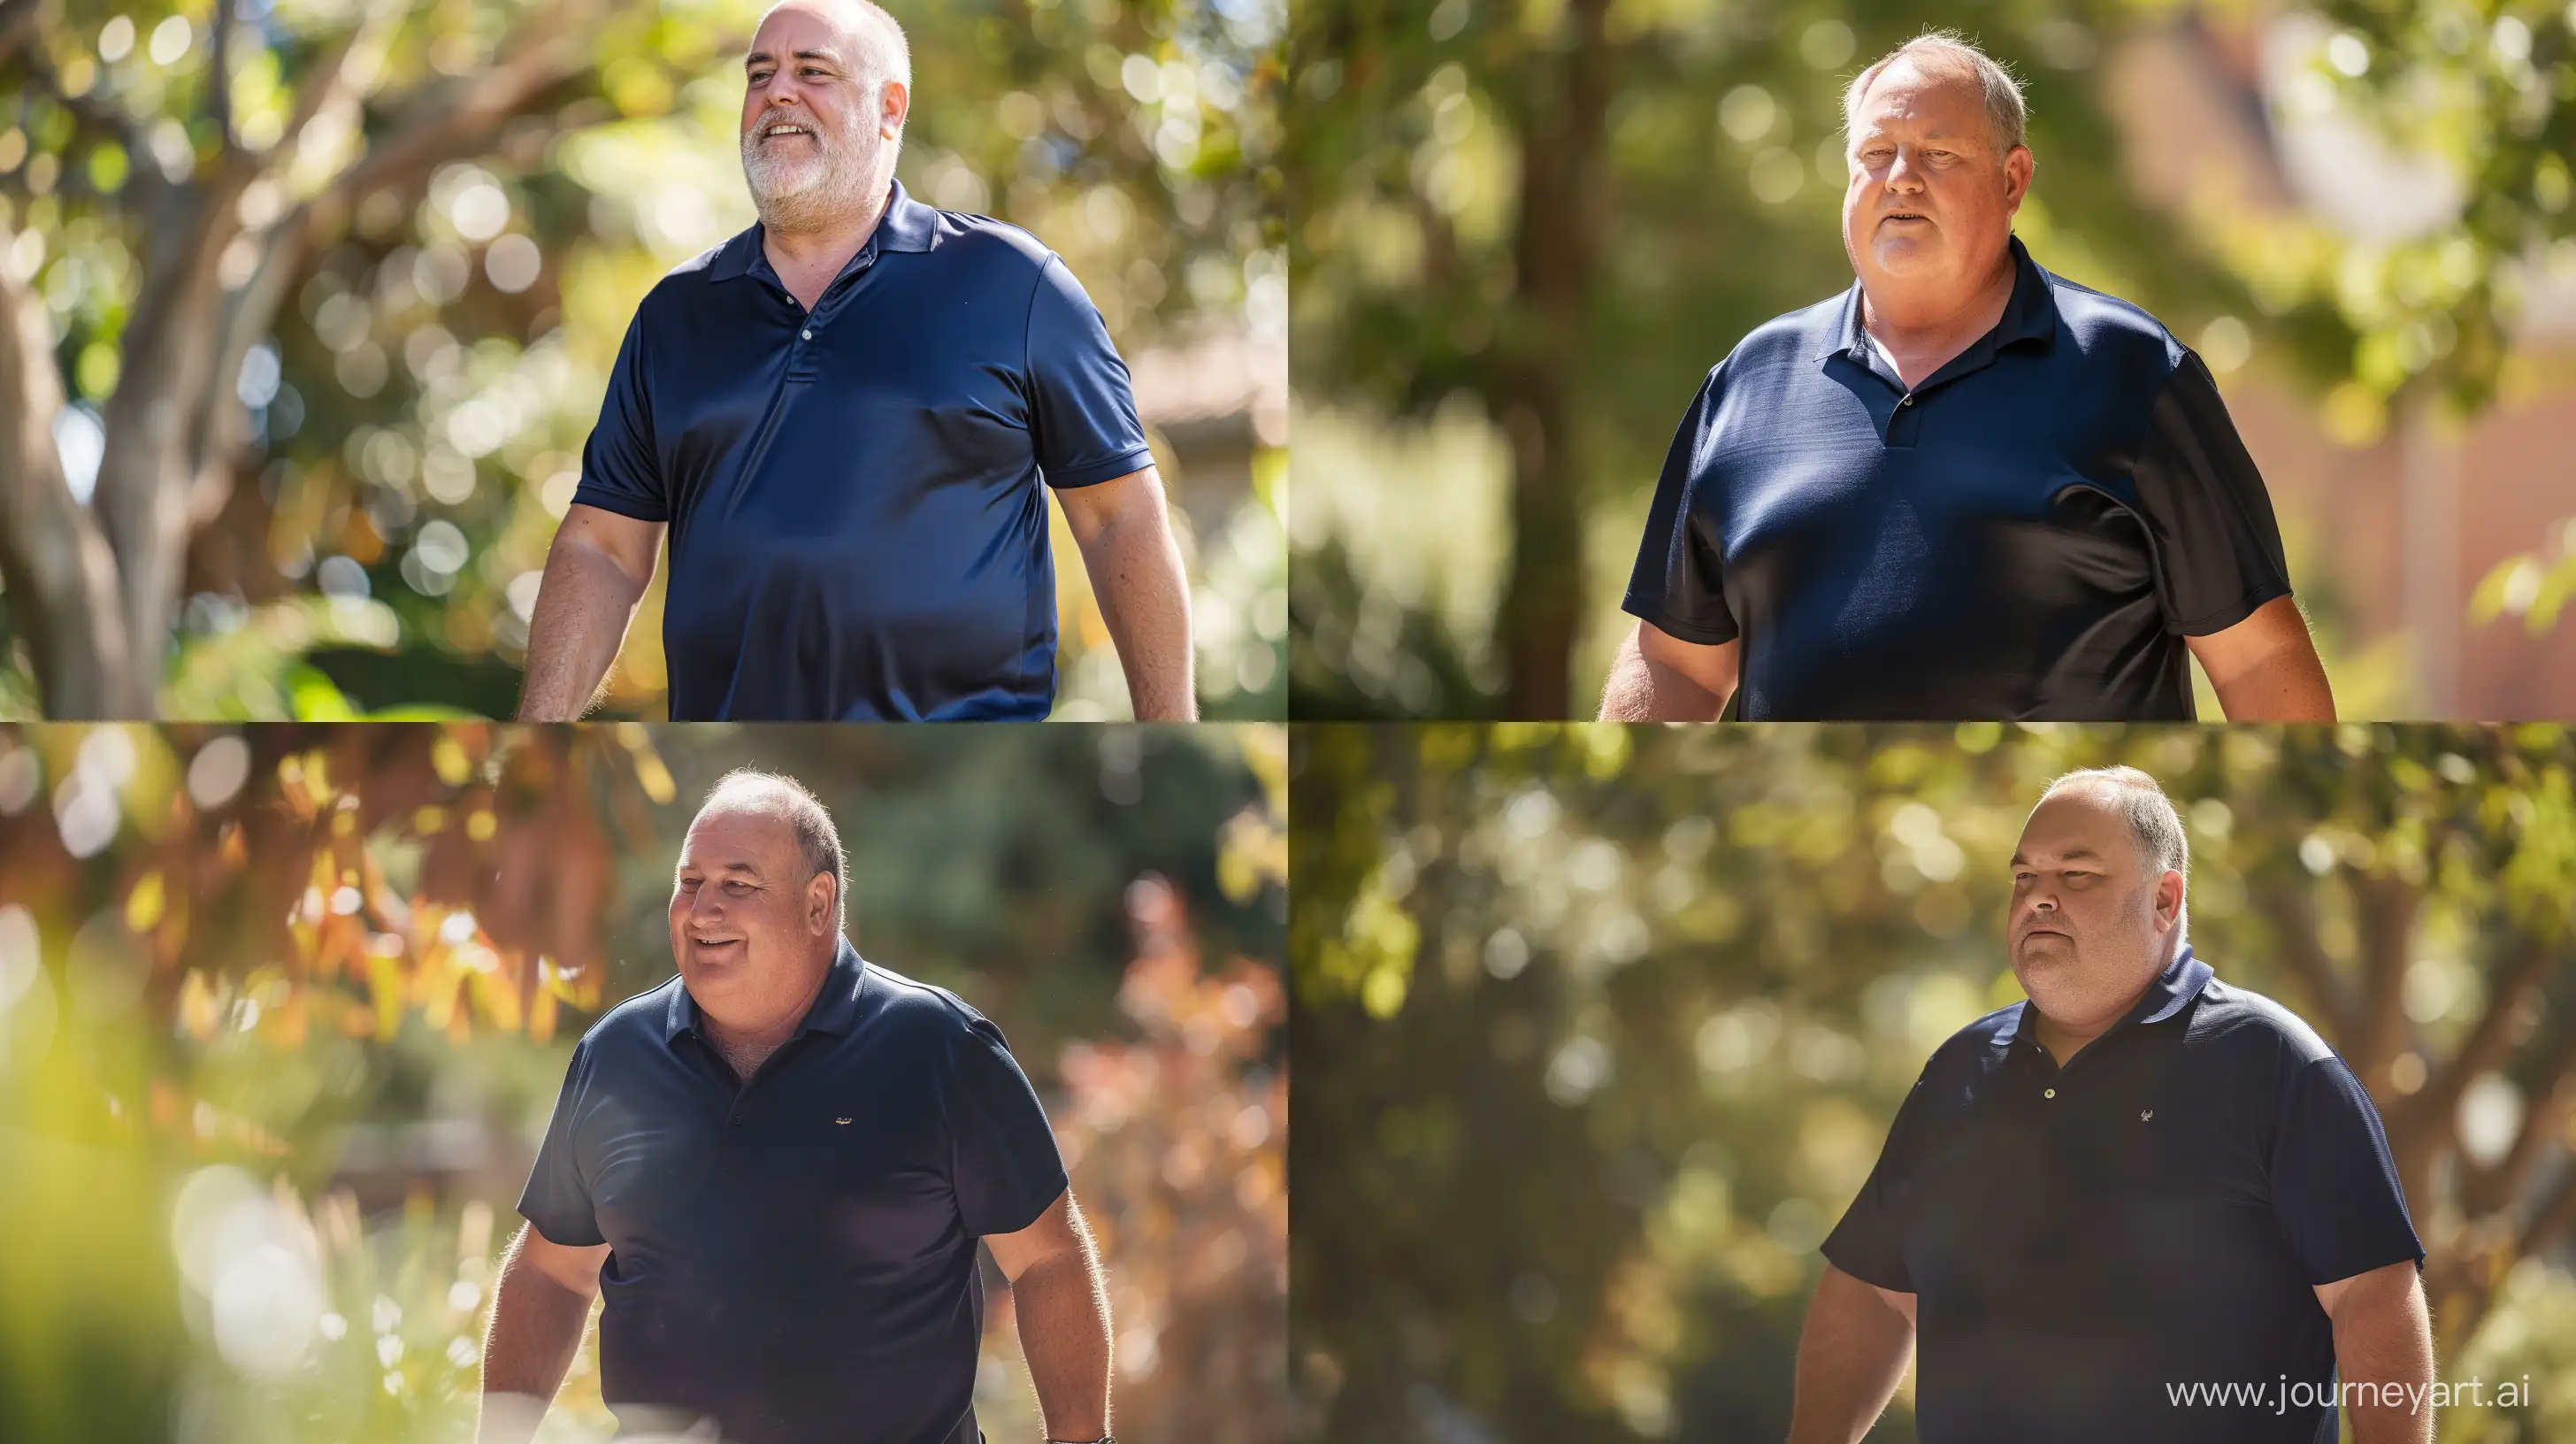 Elderly-Gentleman-Strolling-Outdoors-in-Stylish-Navy-Polo-Shirt